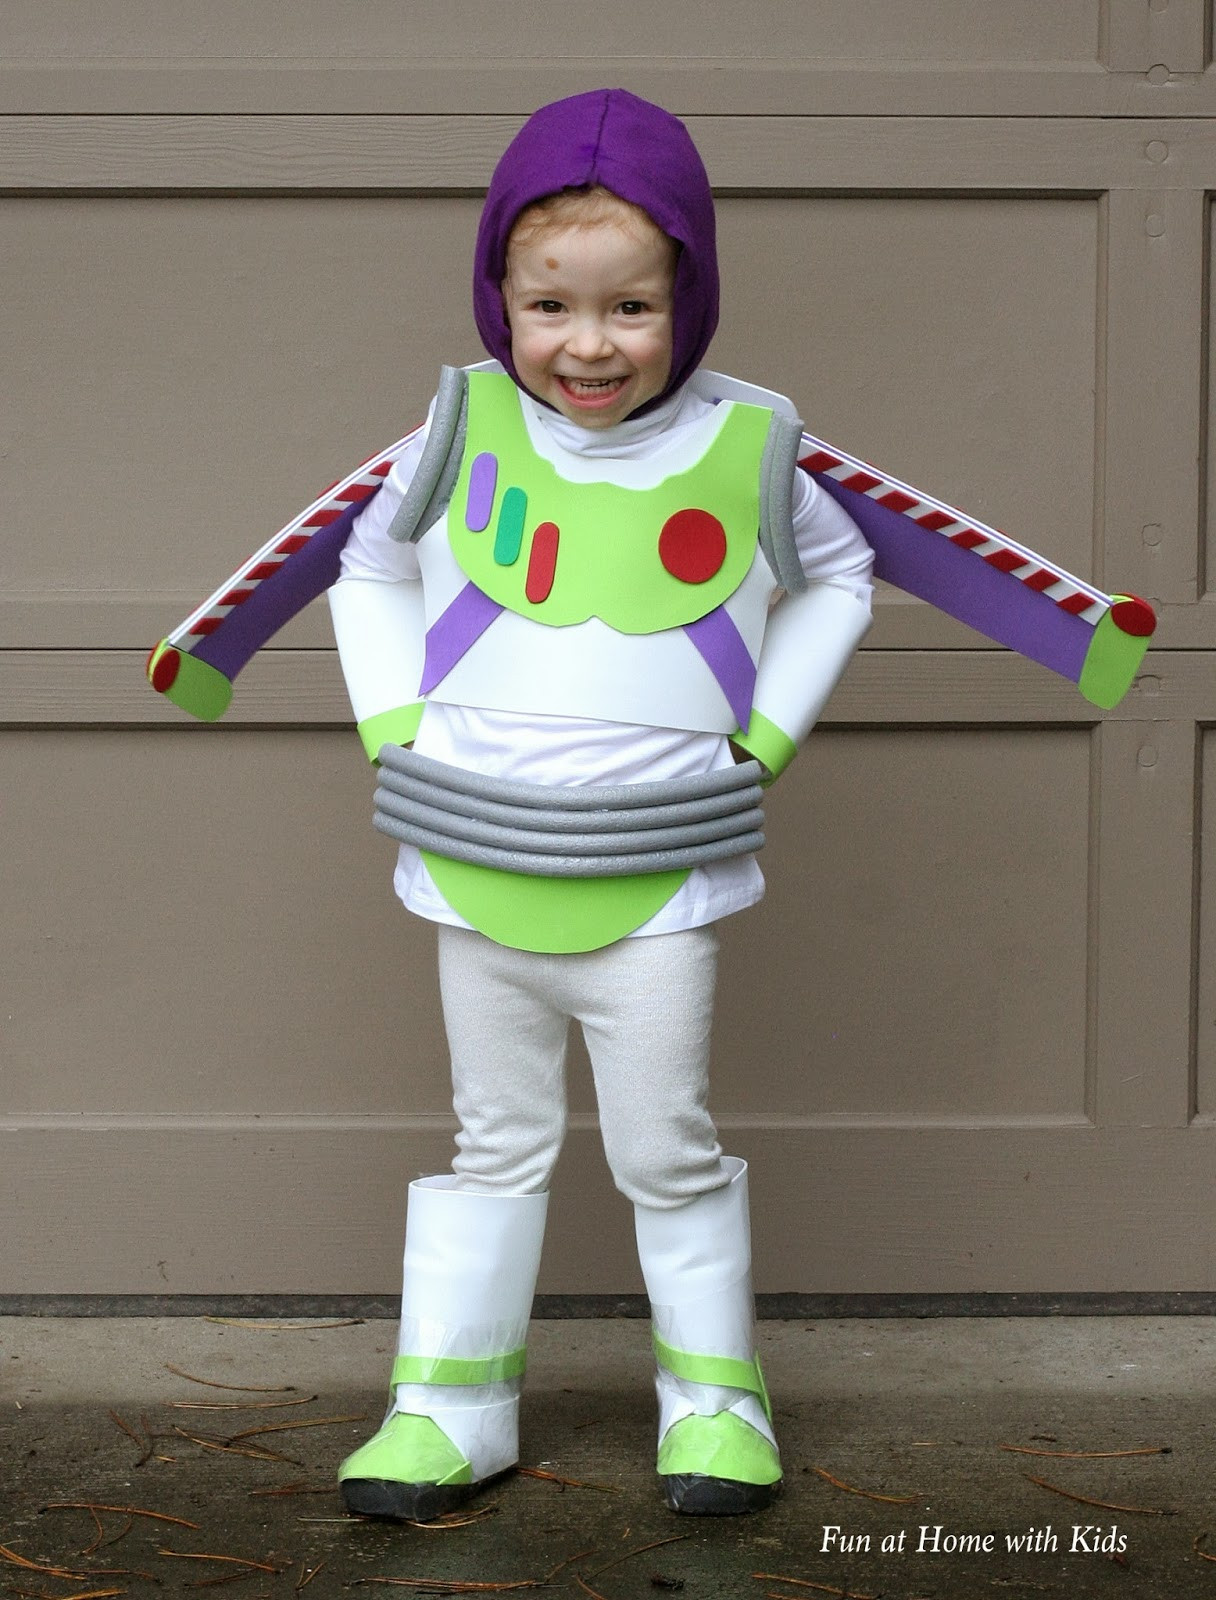 Best ideas about DIY Boys Halloween Costume
. Save or Pin 25 DIY Halloween Costumes For Little Boys Now.